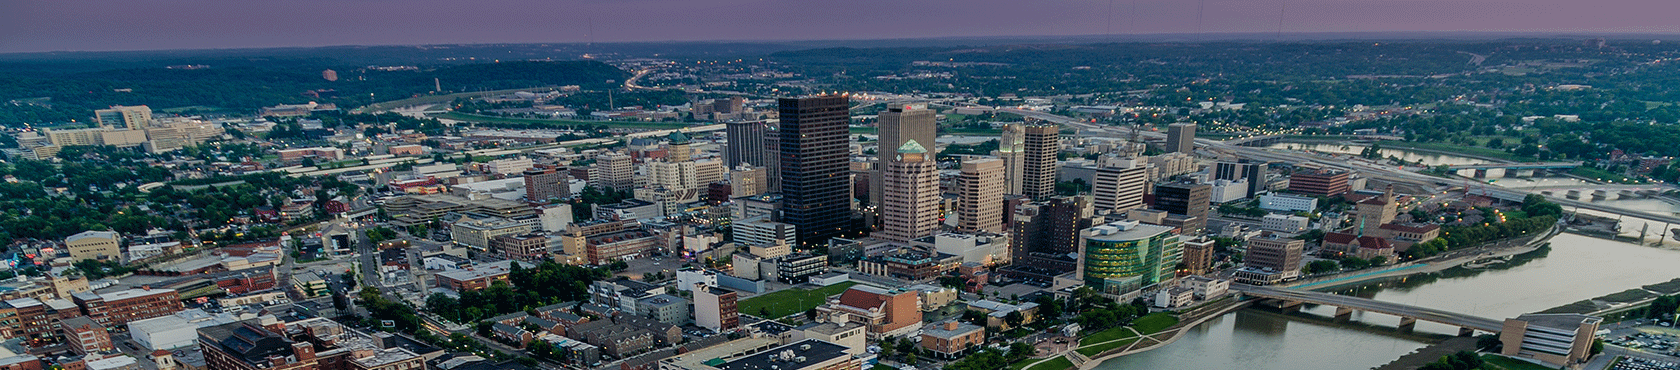 Dayton skyline and river